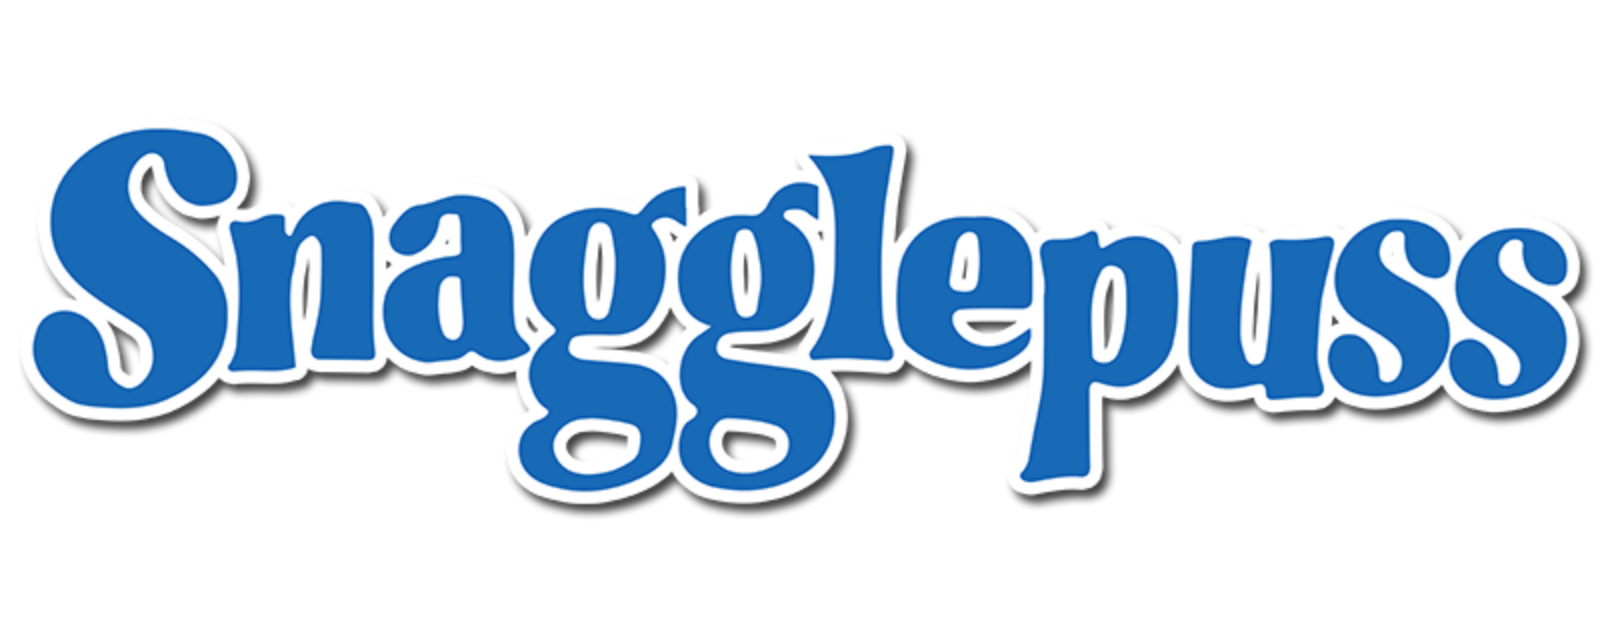 Snagglepuss Complete (1 DVD Box Set)